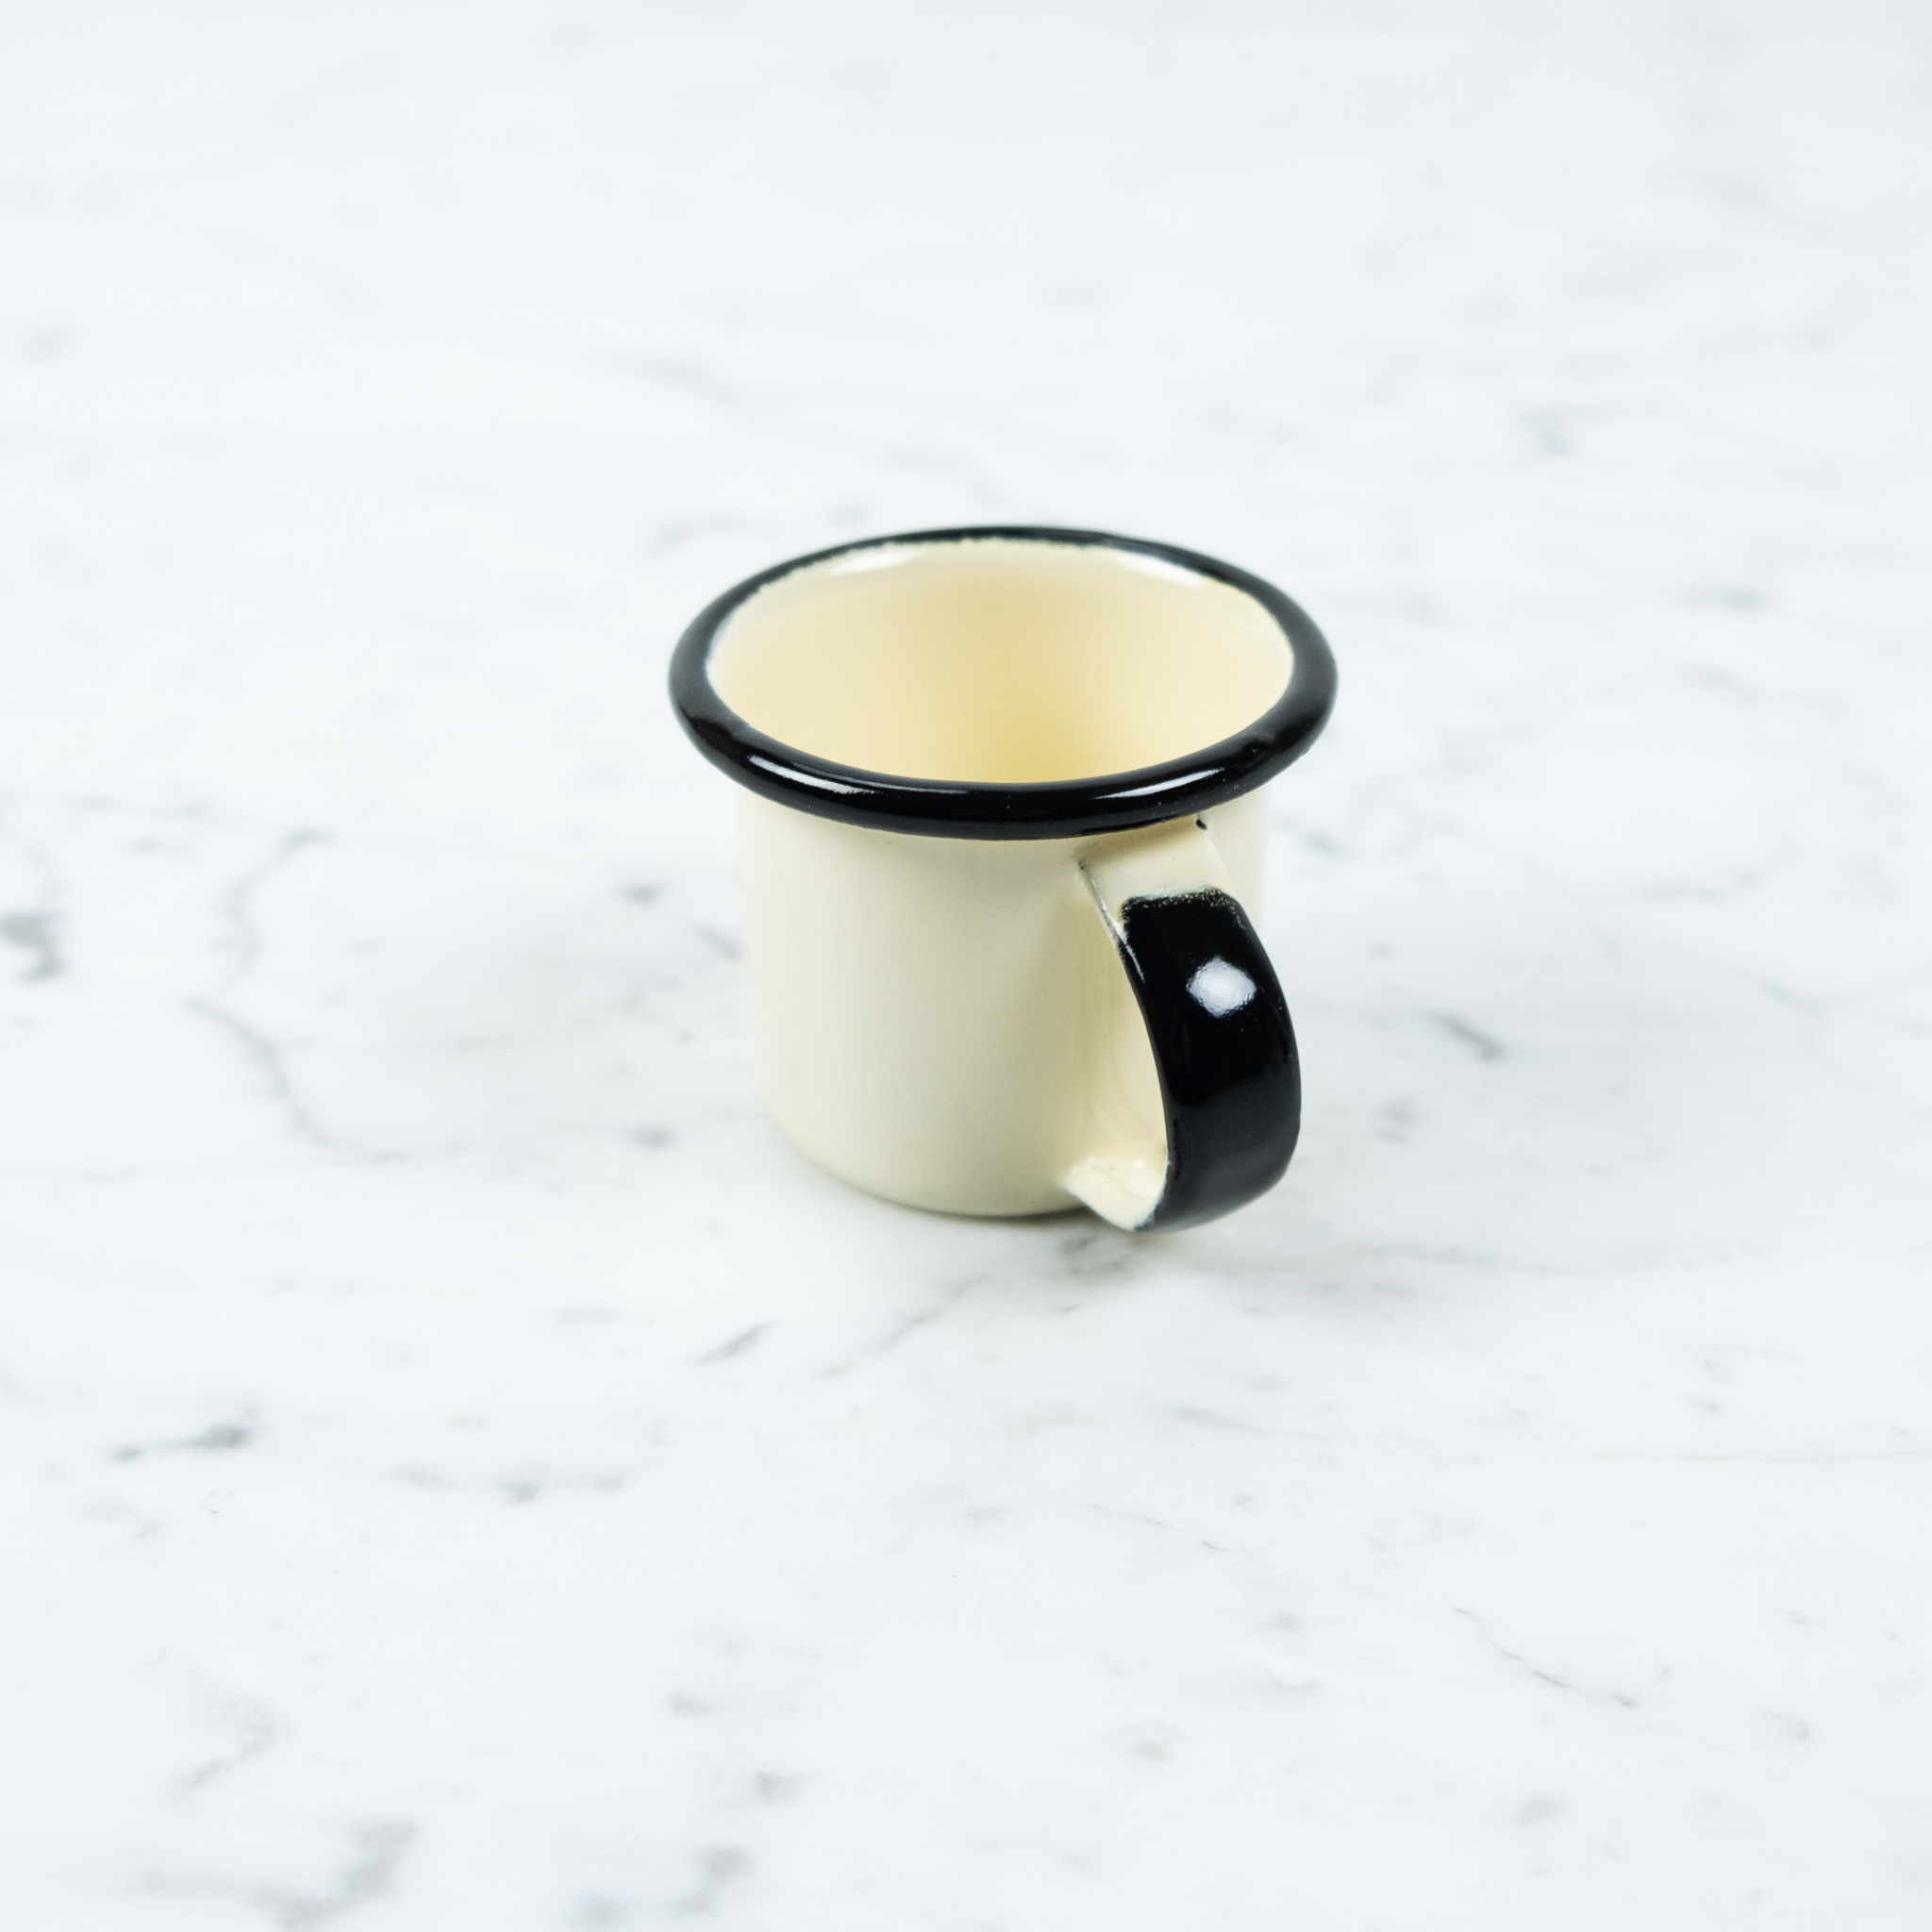 Mini Enamel Mug - Cream + Black